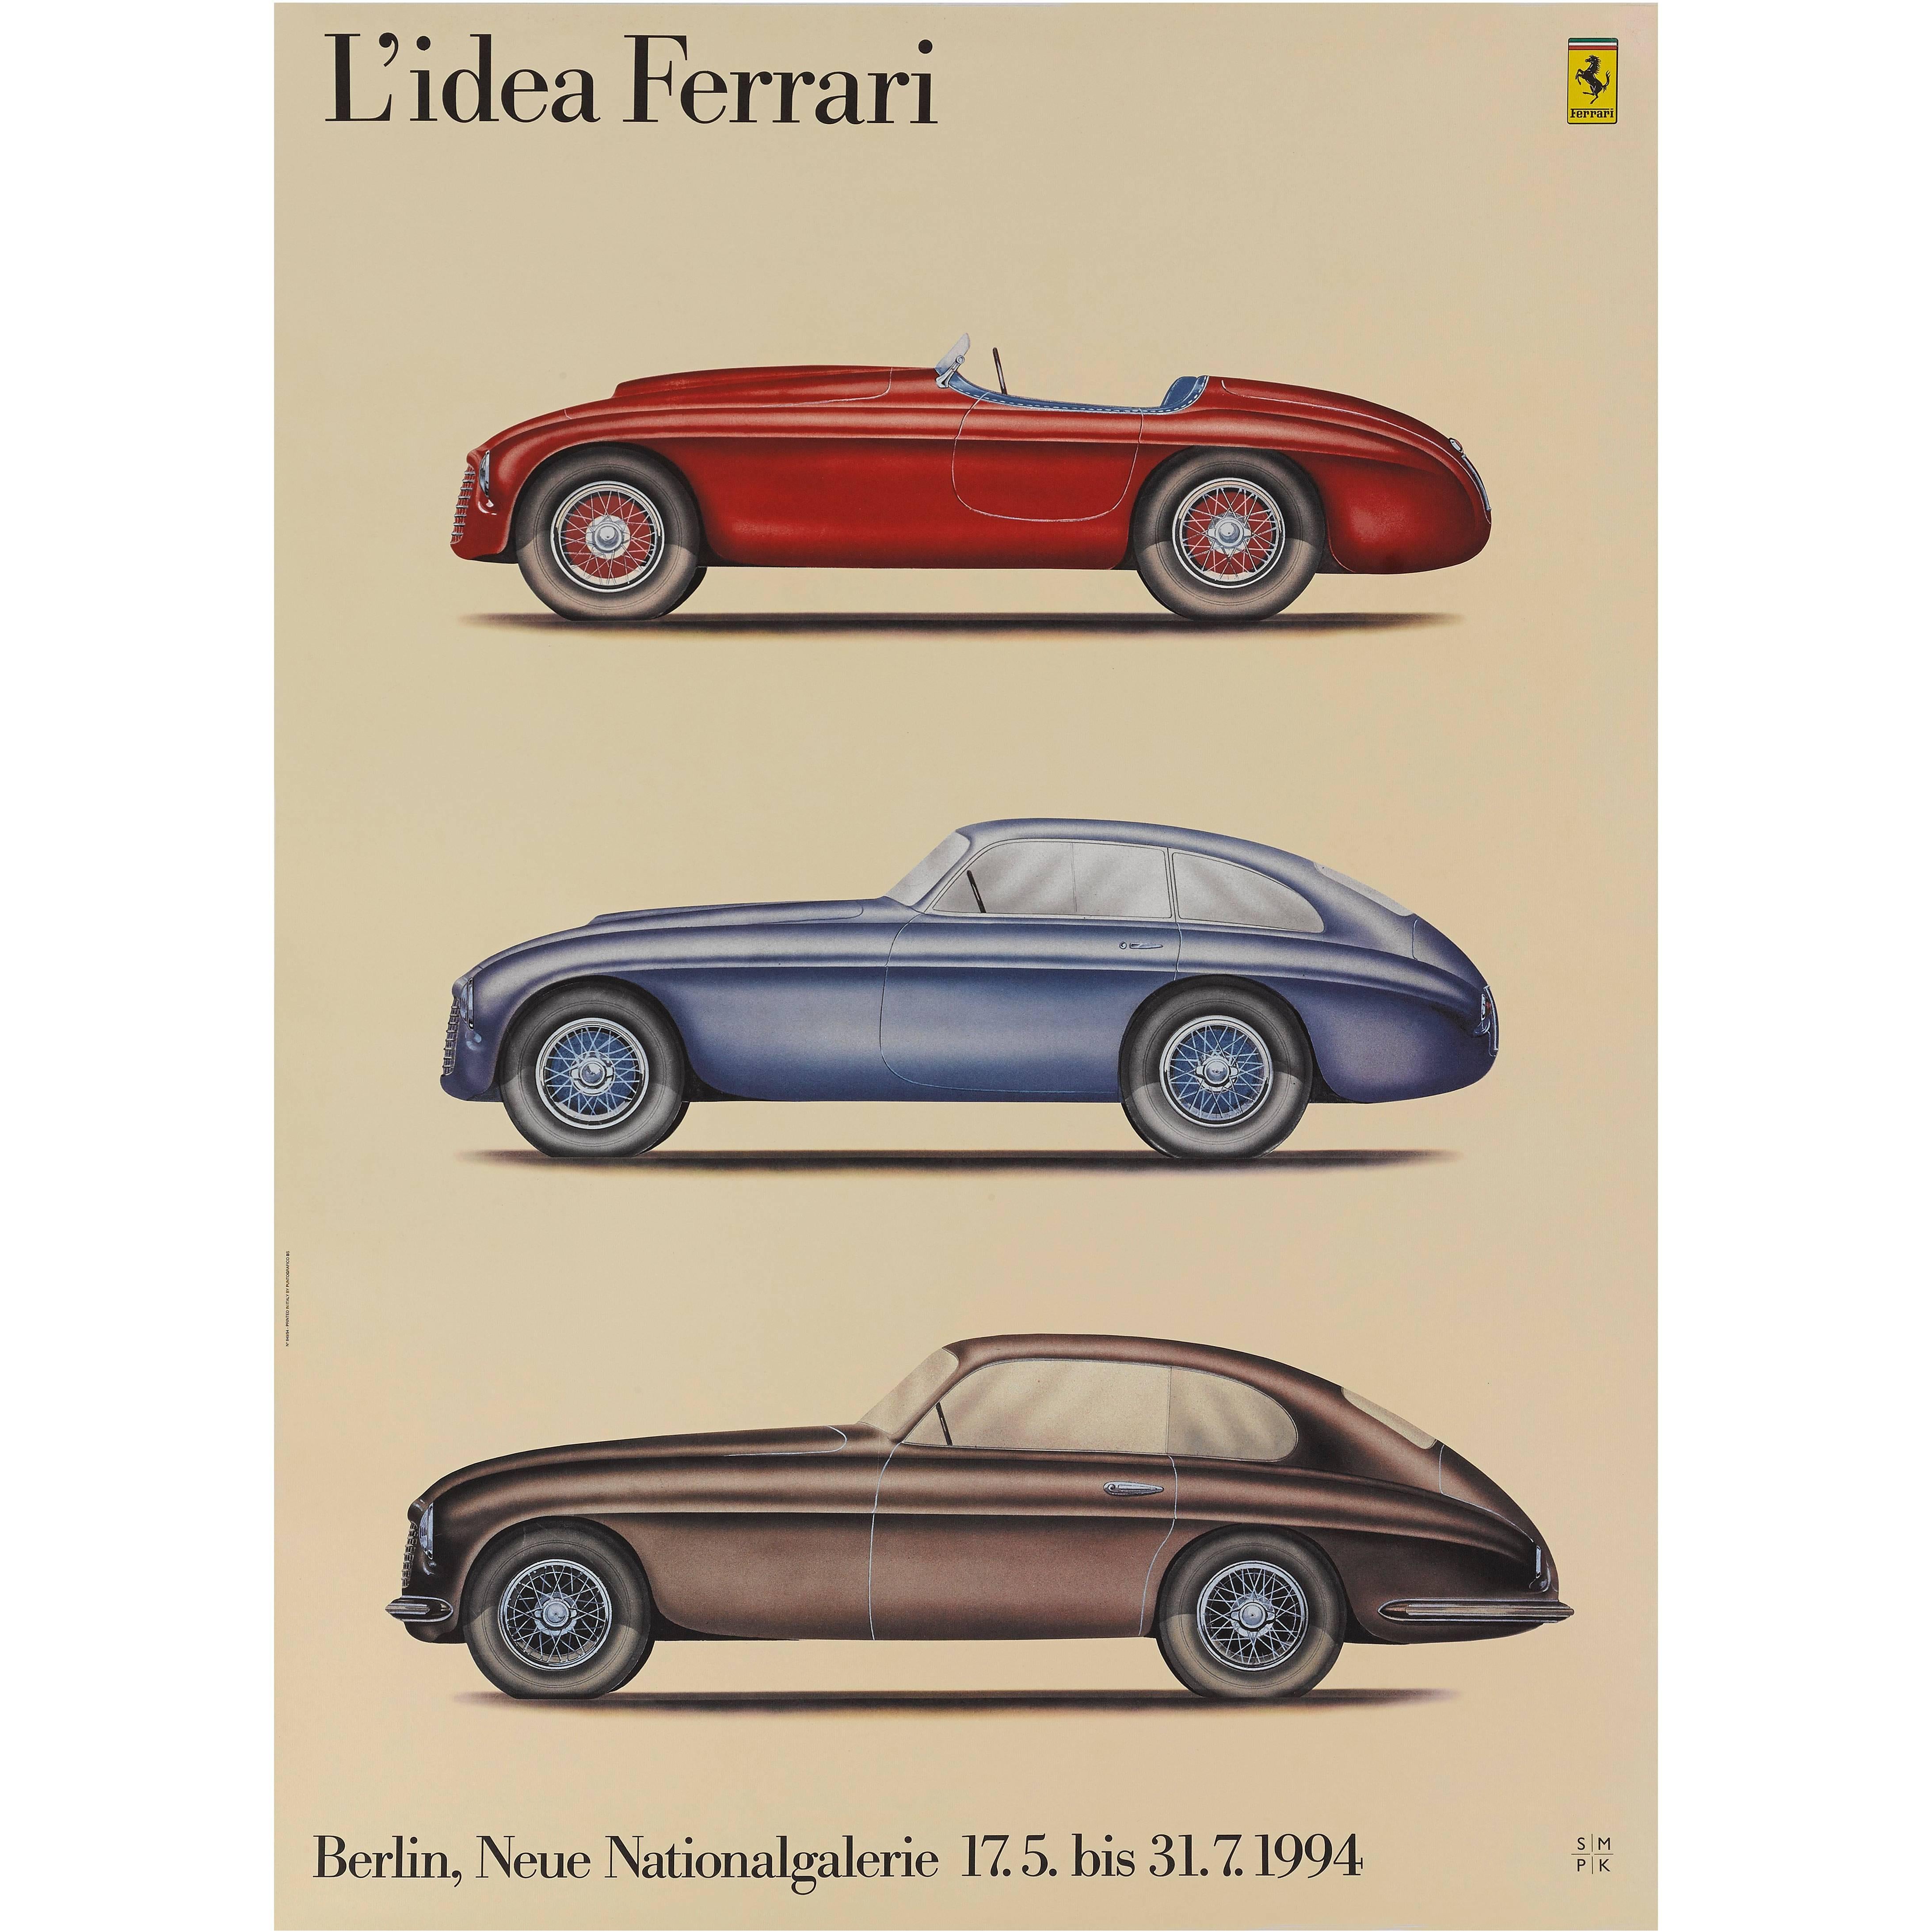 "L'idea Ferrari" Italian Poster